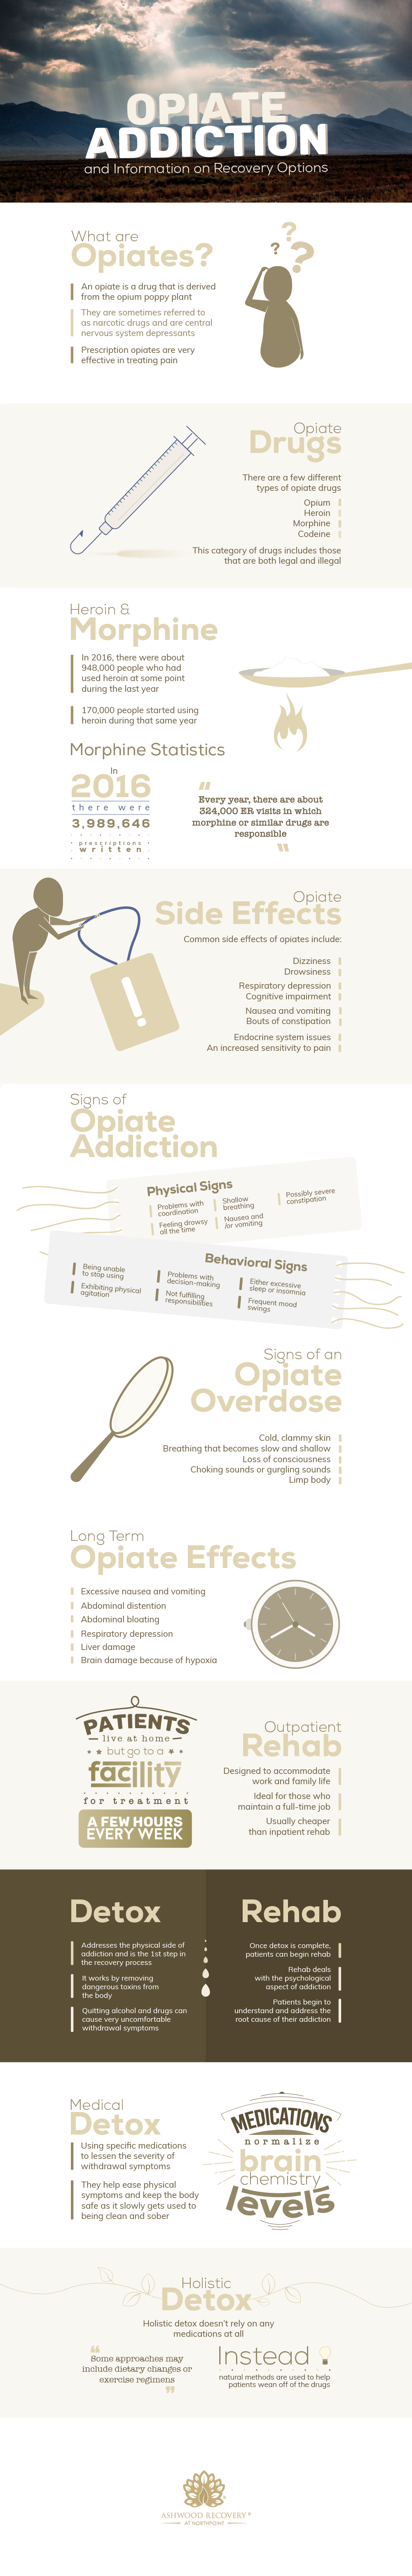 Opiate Addiction Resources Infographic